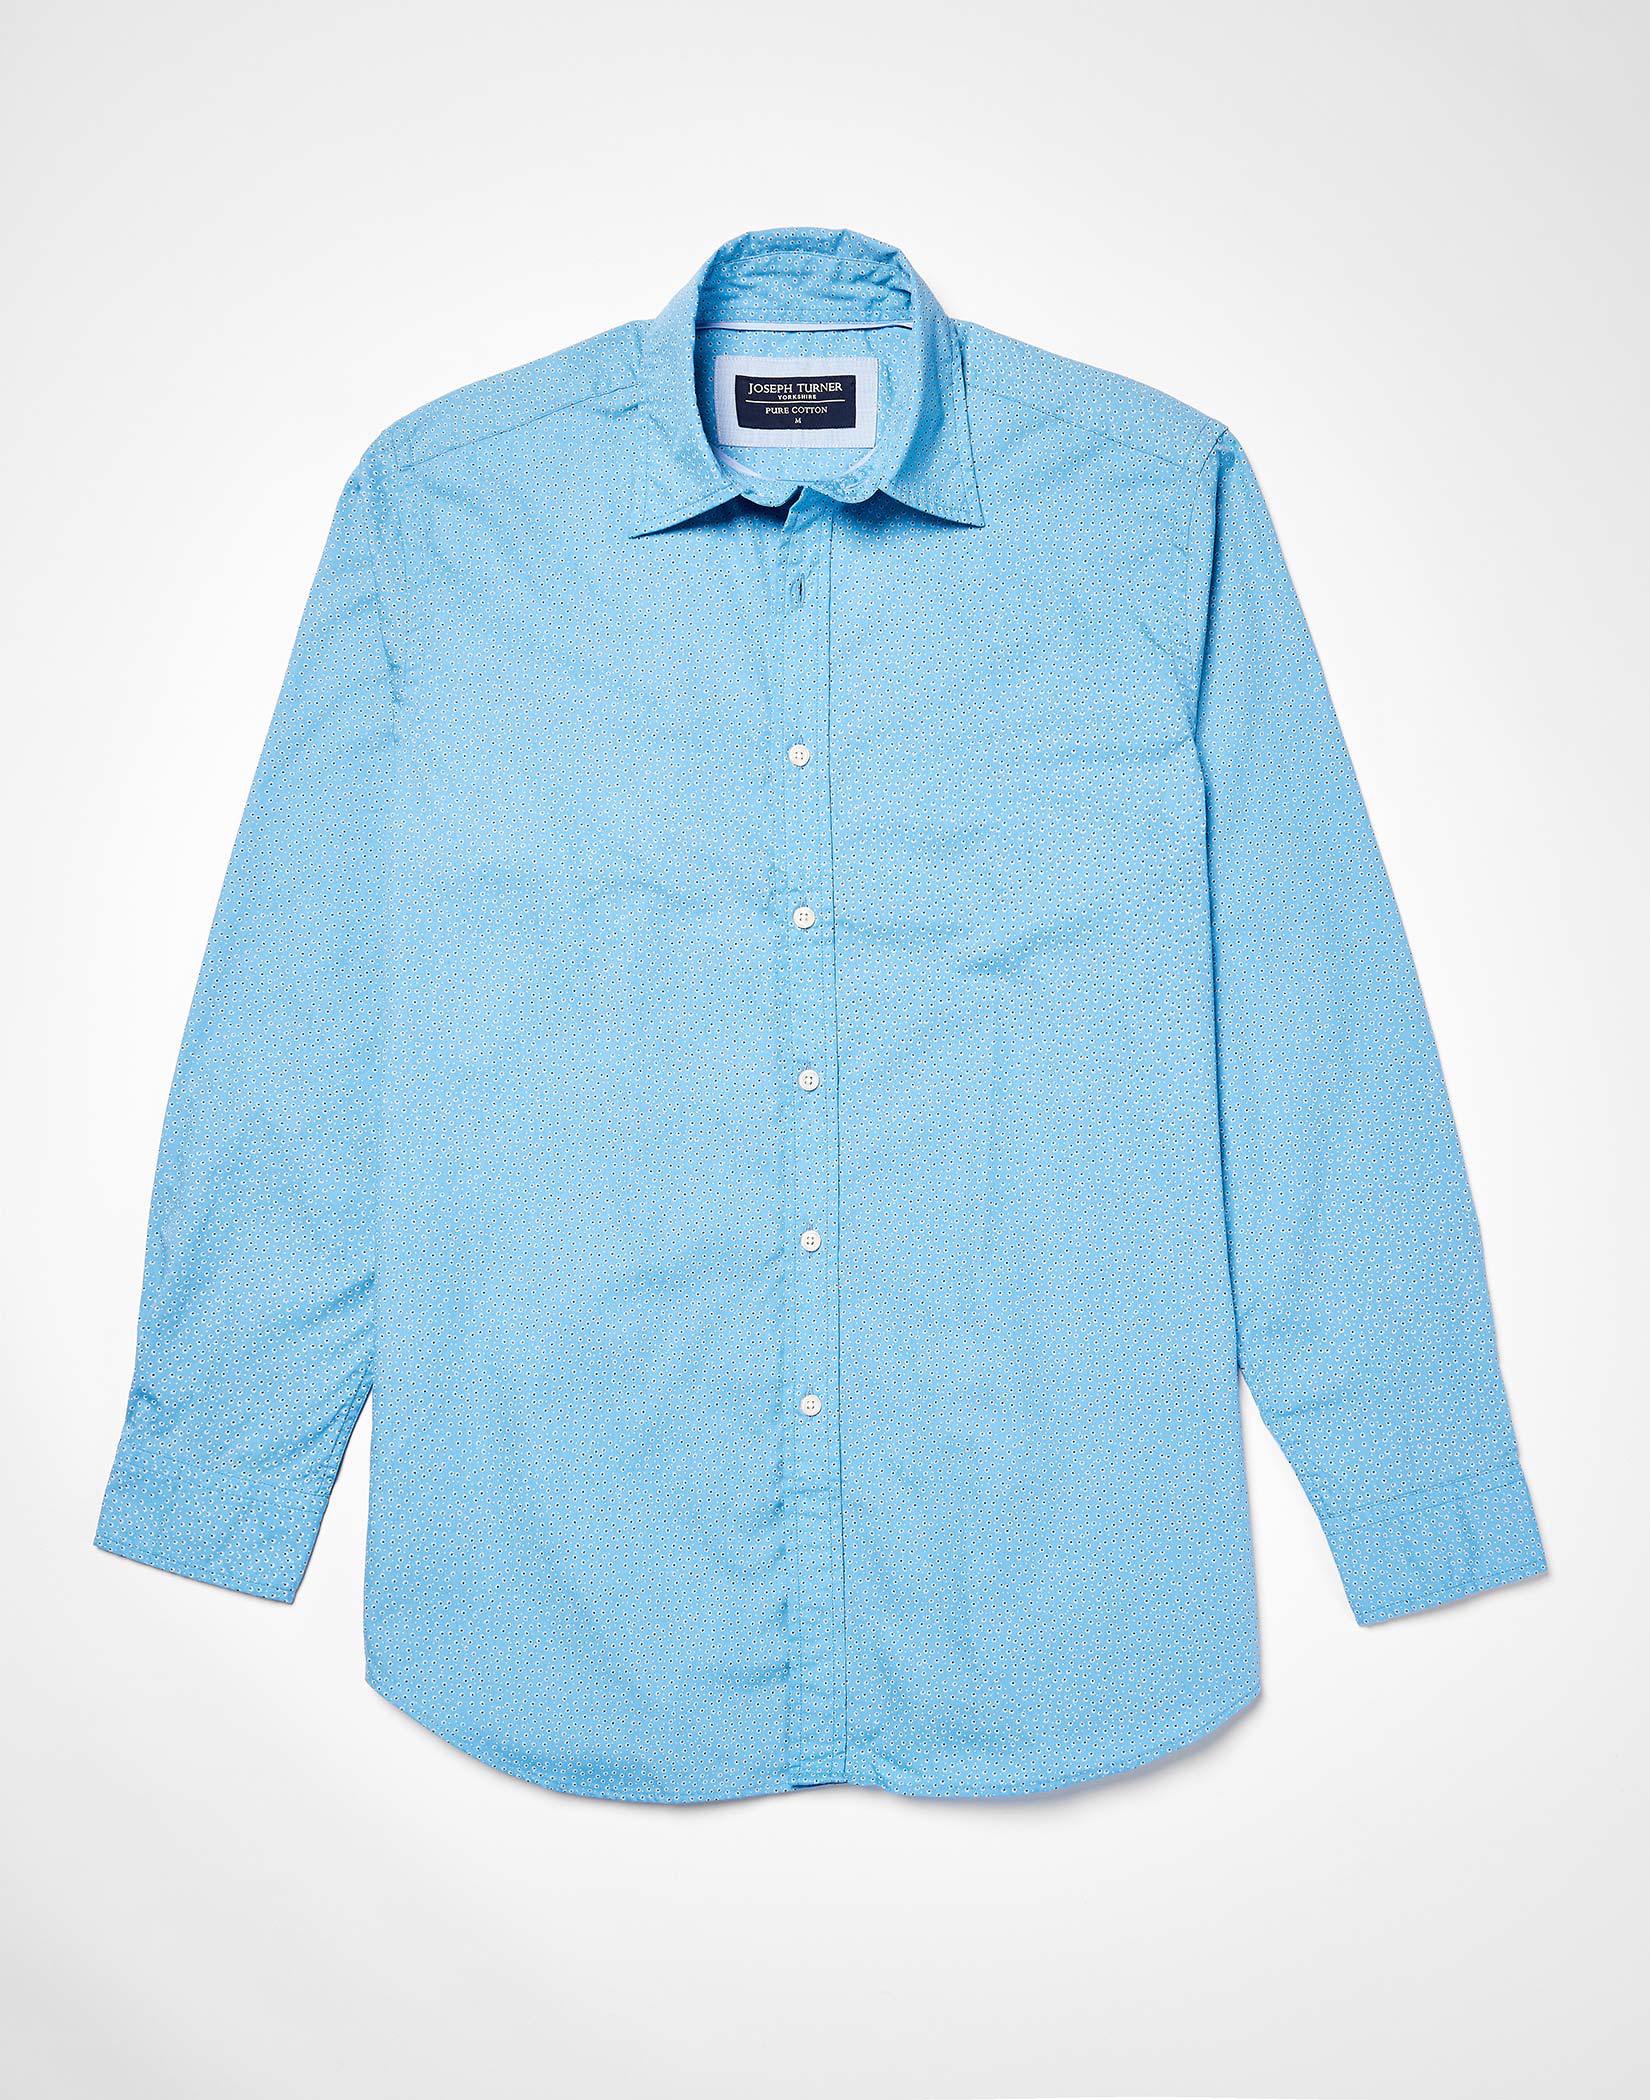 Cotton Print Shirt - Blue Micro Flower